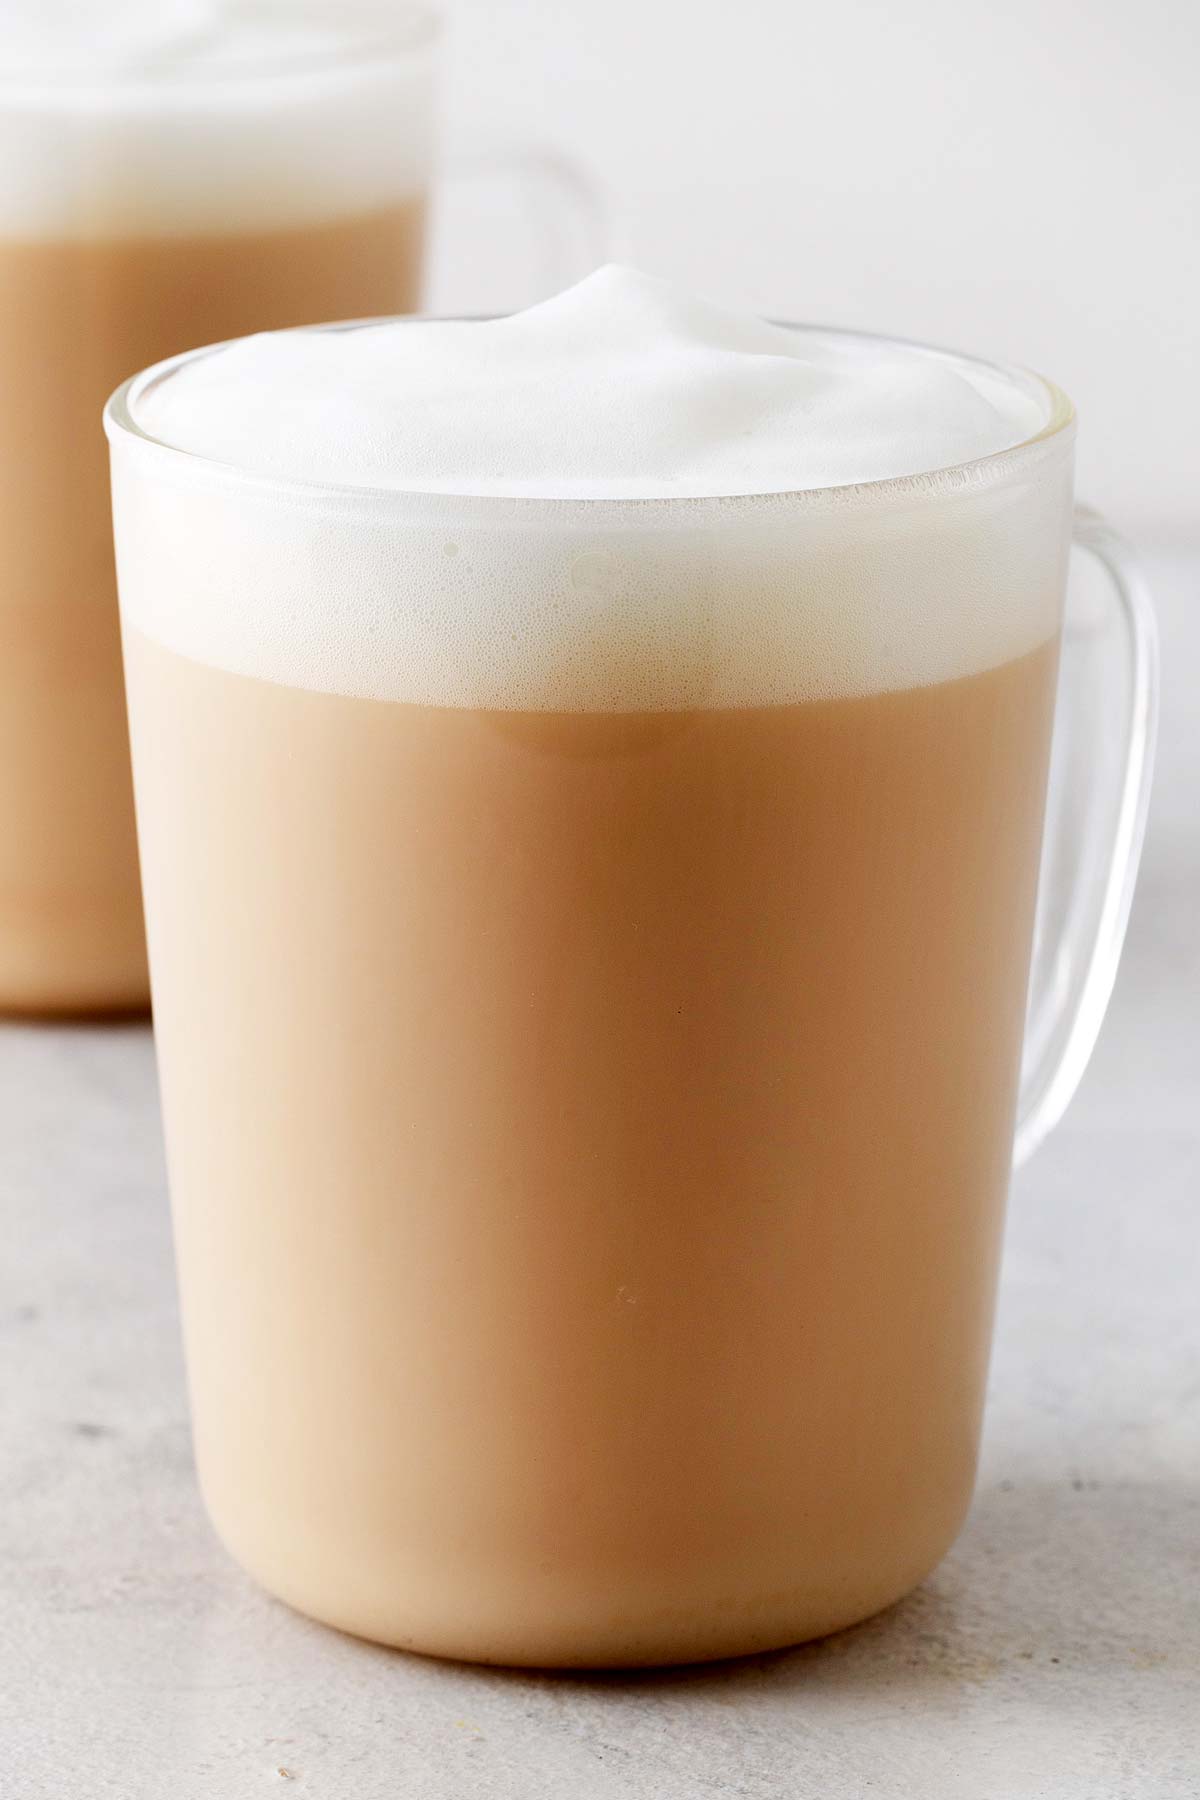 Starbucks London Fog Tea Latte Copycat in clear mug.